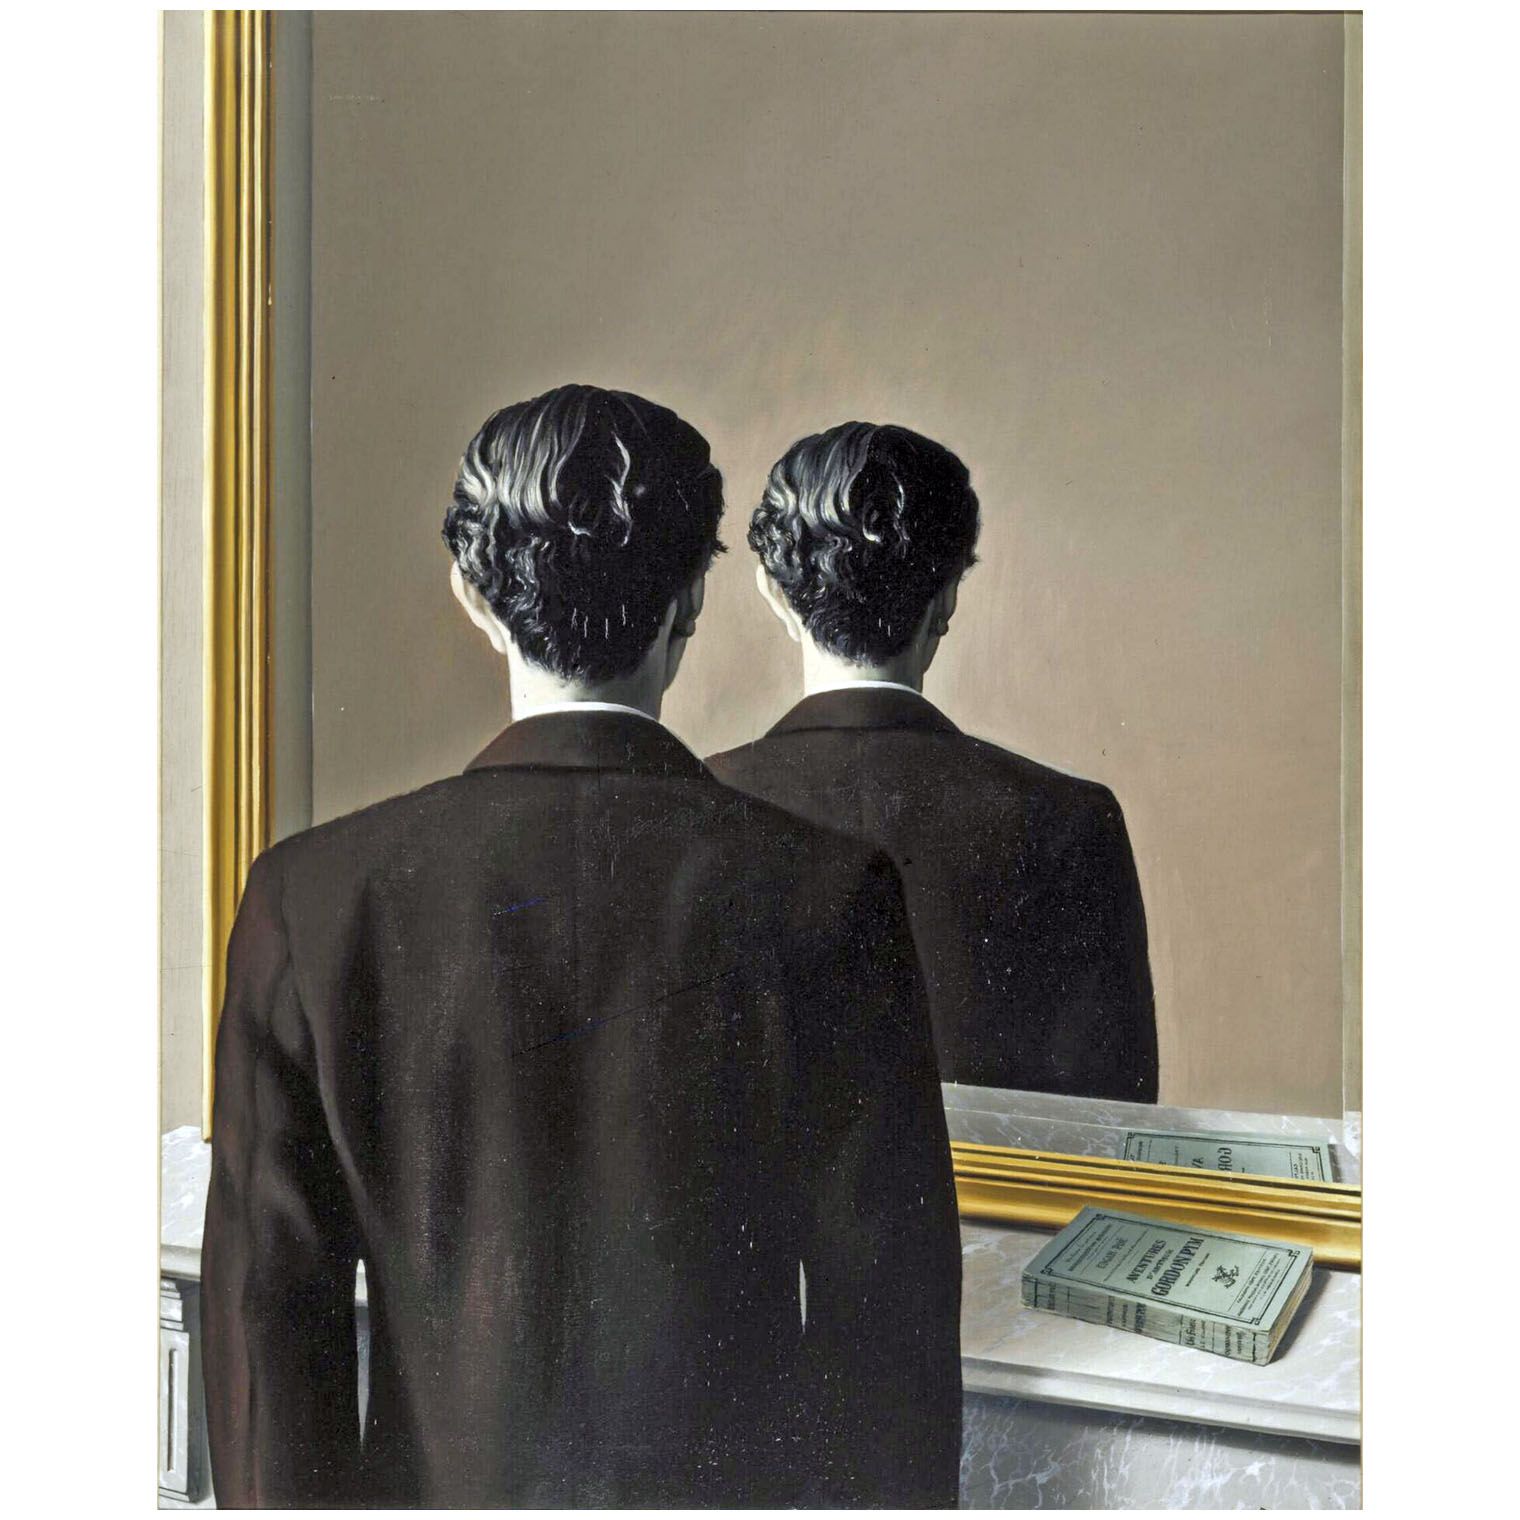 Rene Magritte. La reproduction interdite. 1937. Boijmans Van Beuningen, Rotterdam